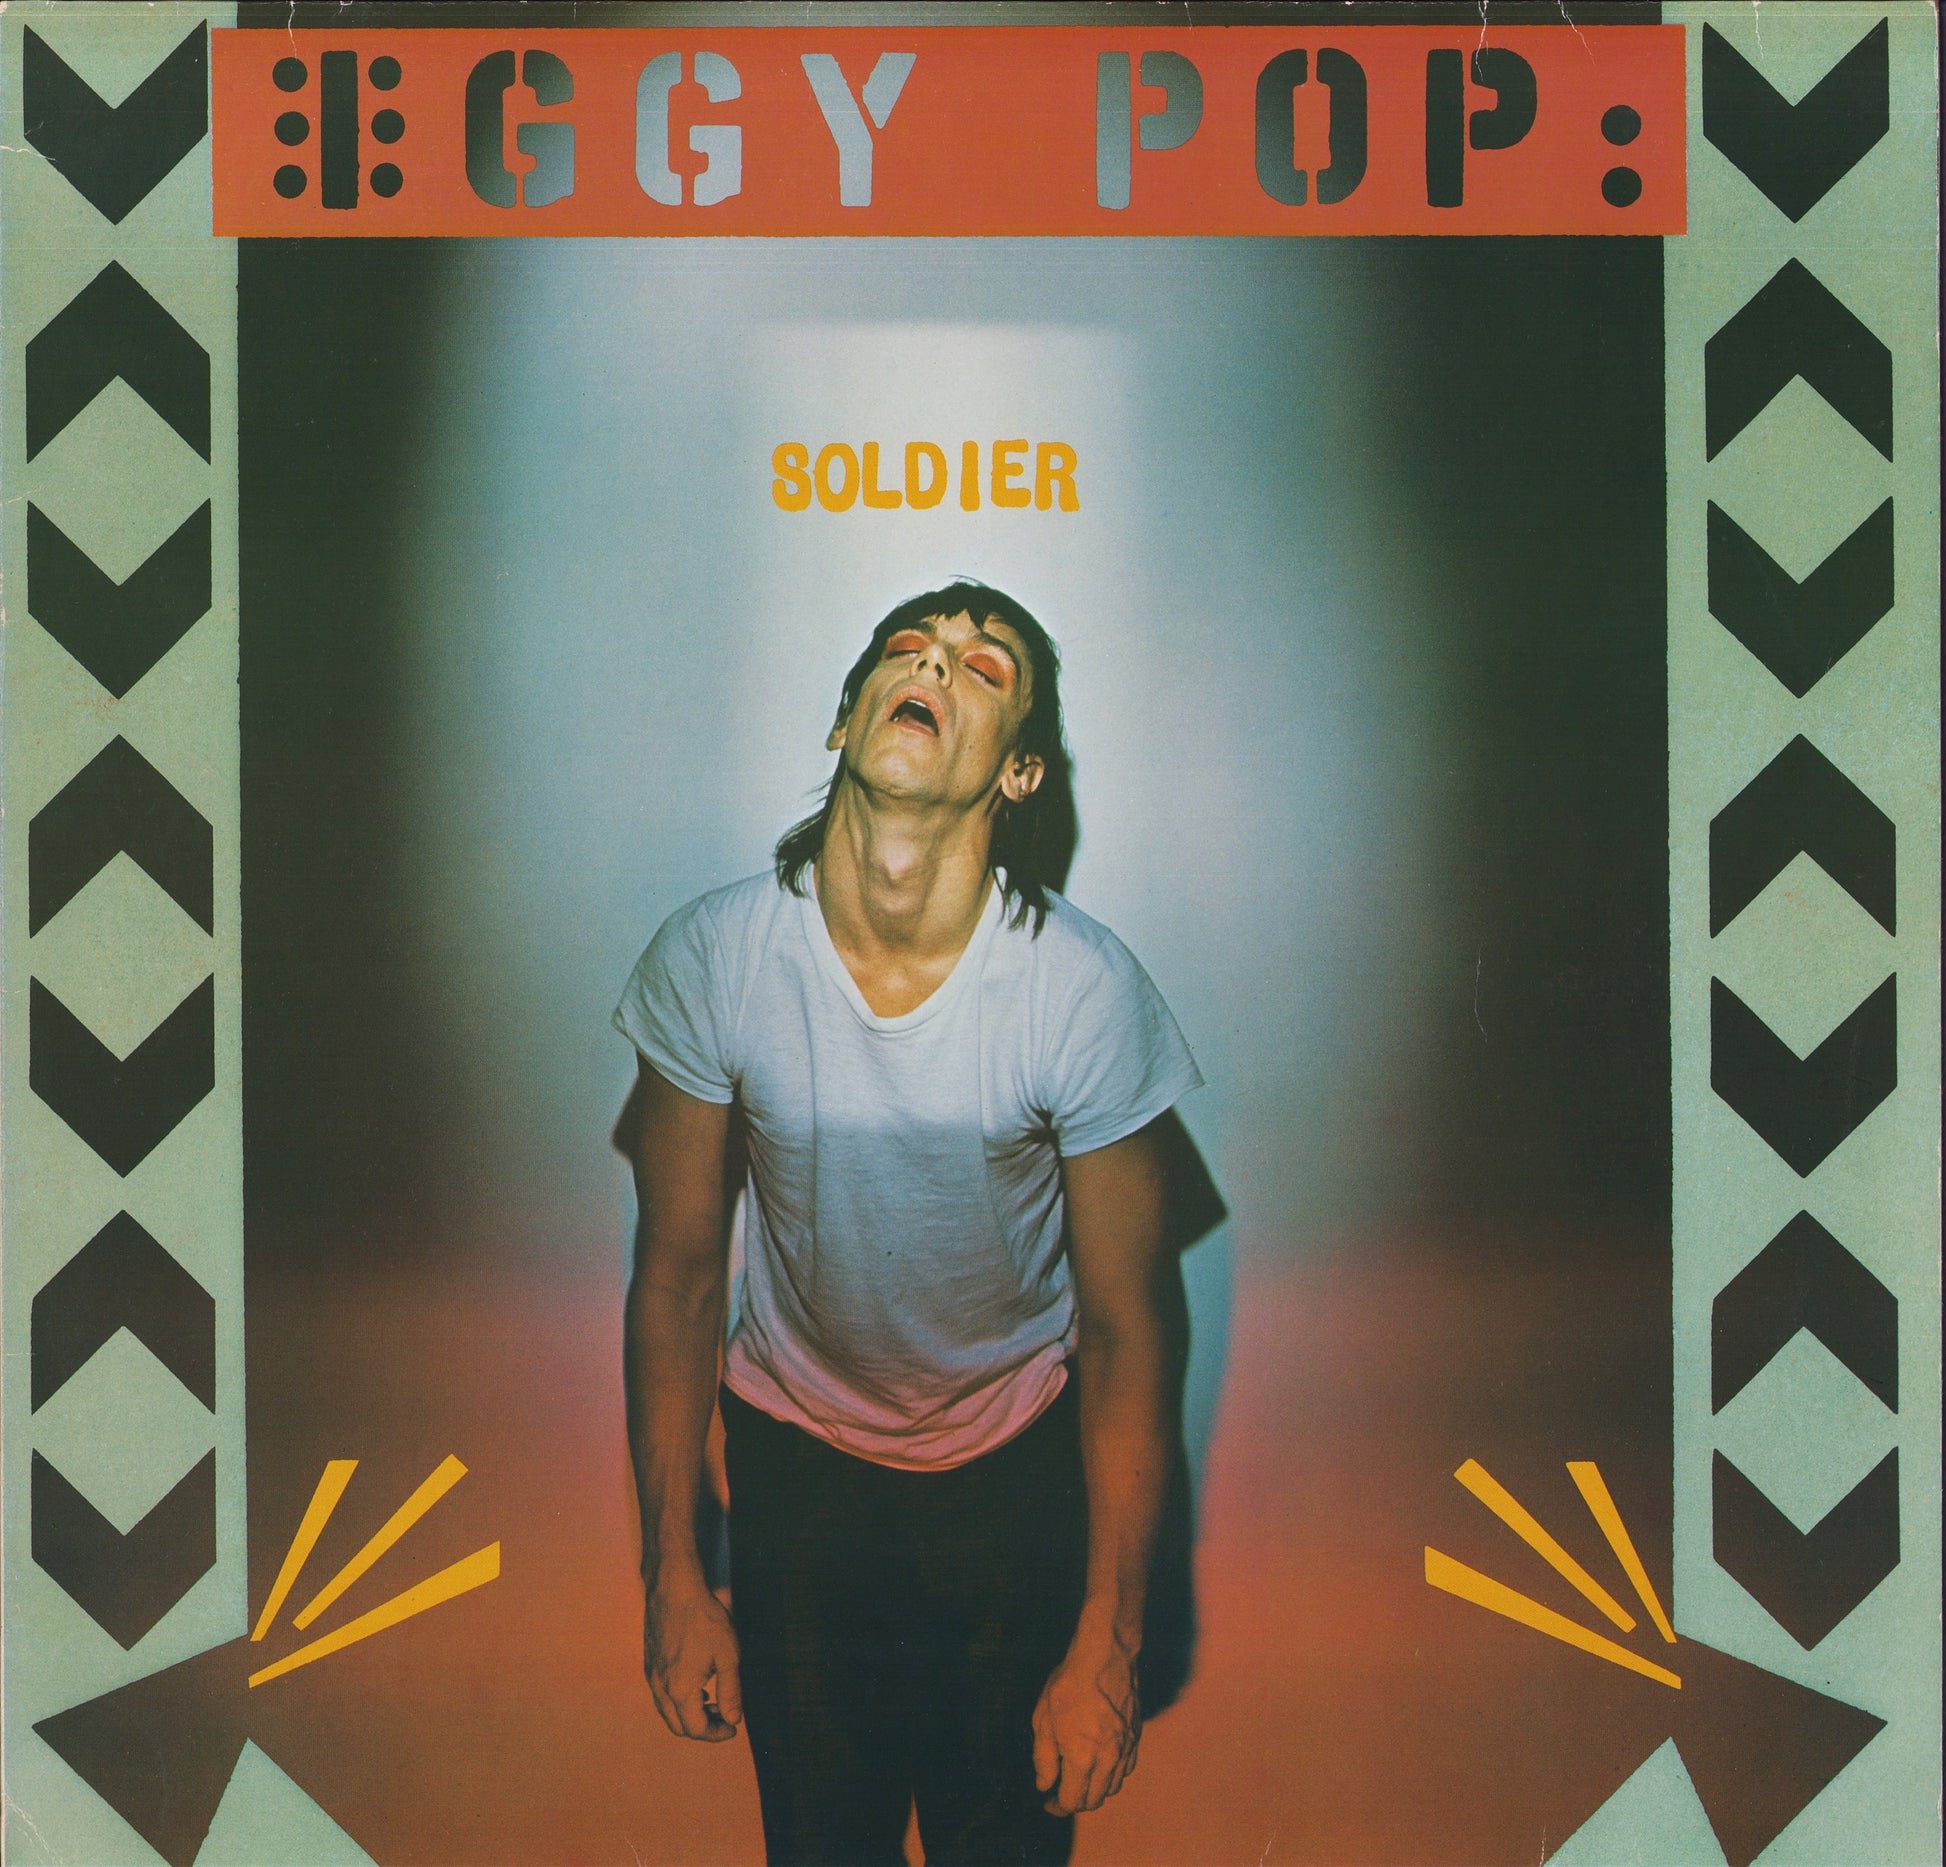 Iggy Pop ‎- Soldier Vinyl LP